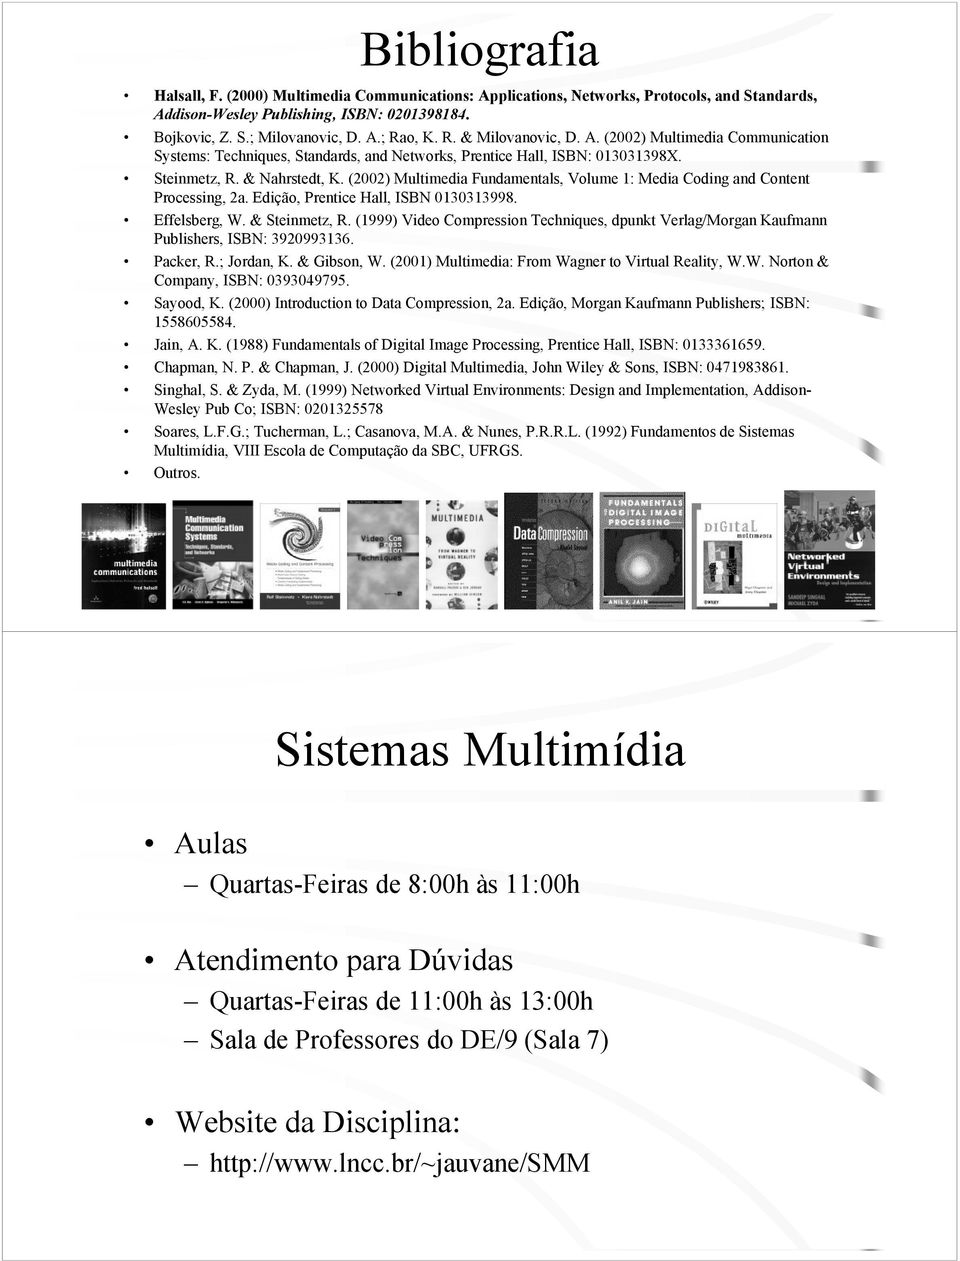 (2002) Multimedia Fundamentals, Volume 1: Media Coding and Content Processing, 2a. Edição, Prentice Hall, ISBN 0130313998. Effelsberg, W. & Steinmetz, R.